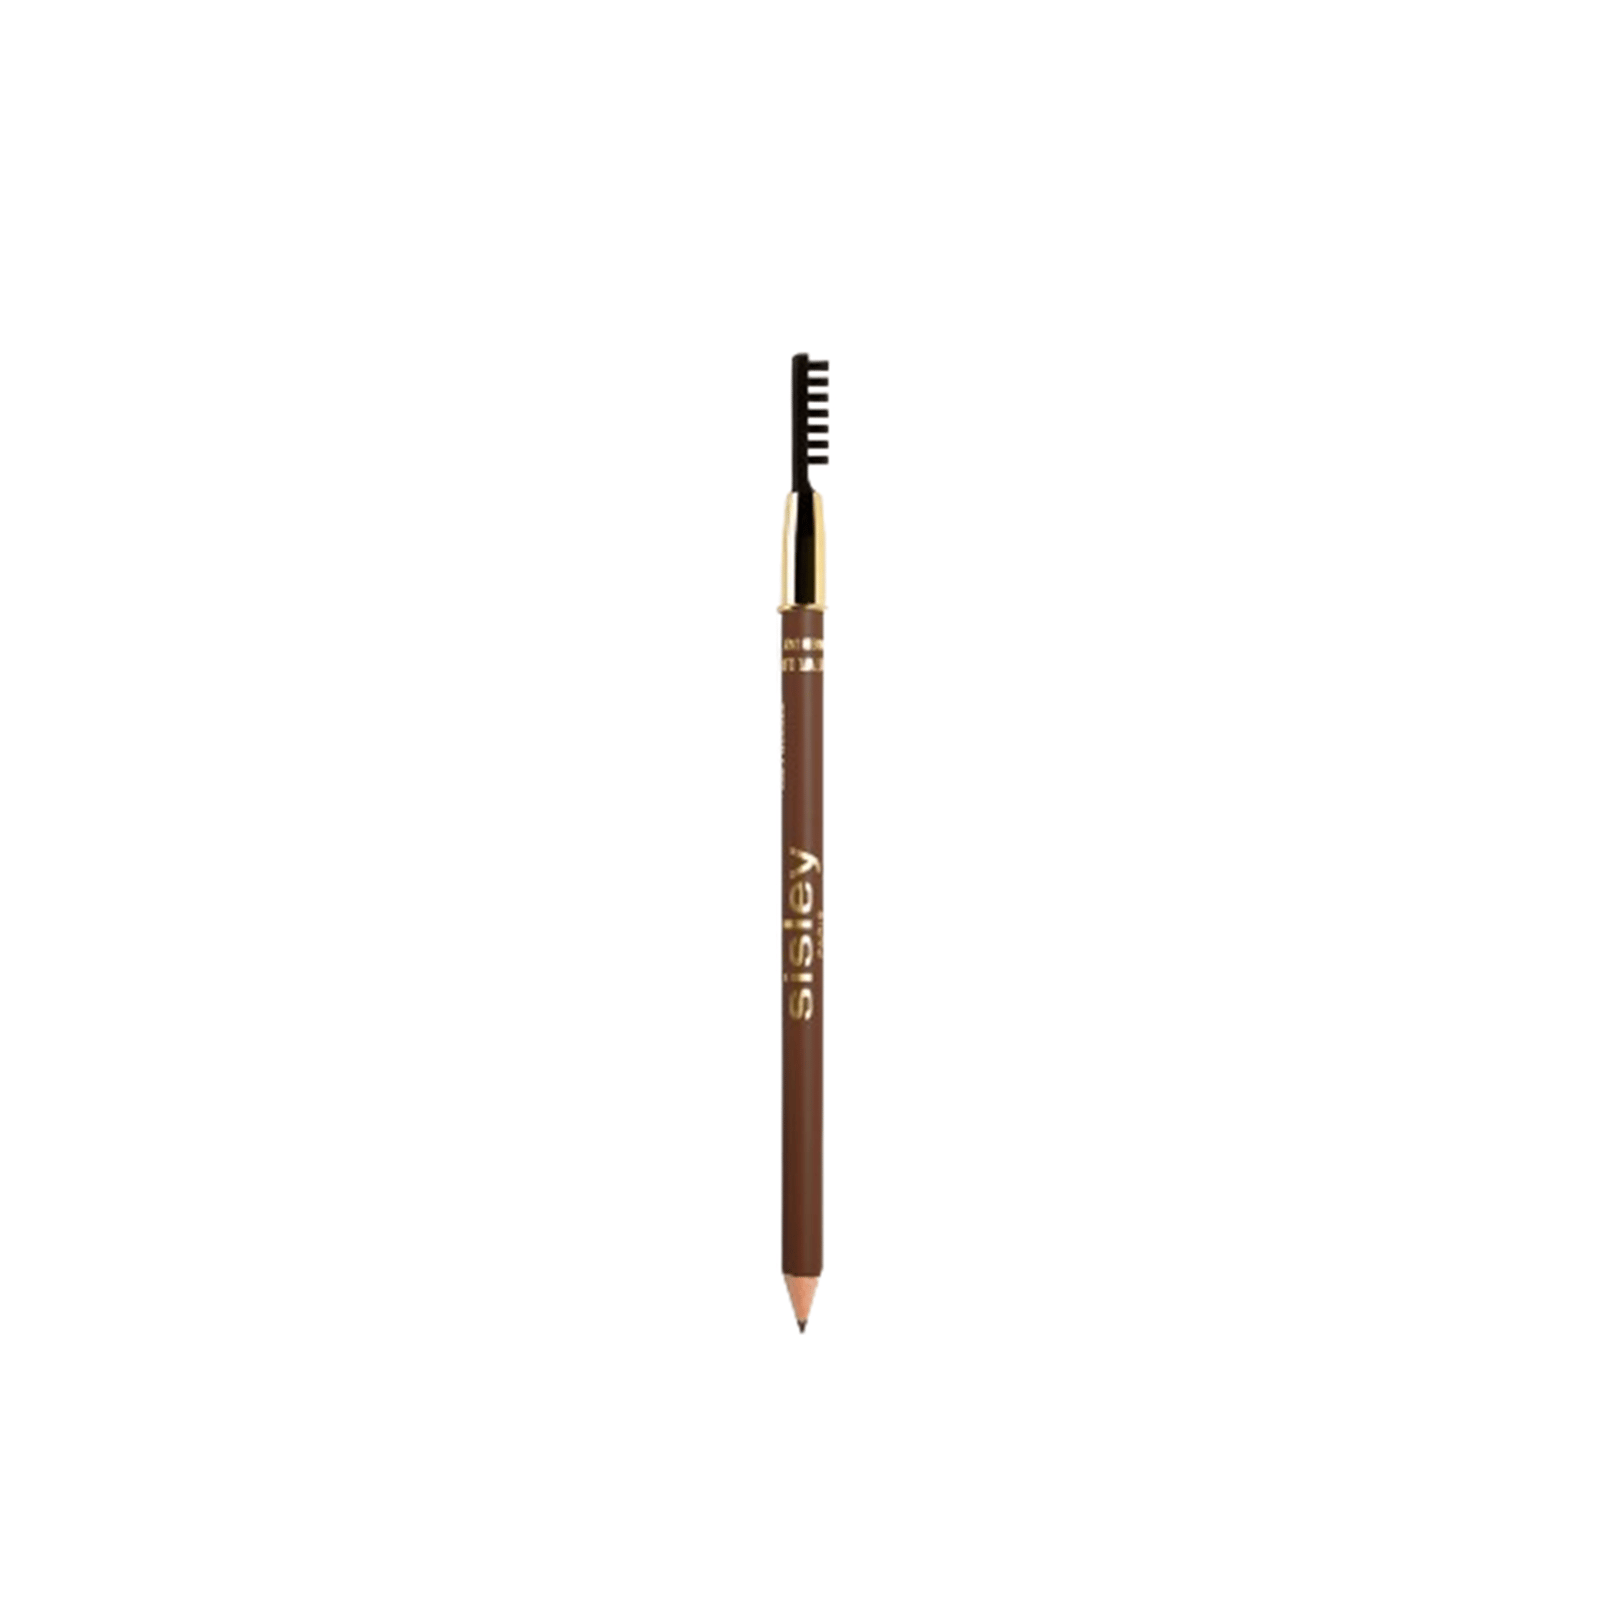 Sisley Paris Phyto Sourcils Perfect Eyeliner Pencil 2 Chatain 0.55g (0.019 oz)